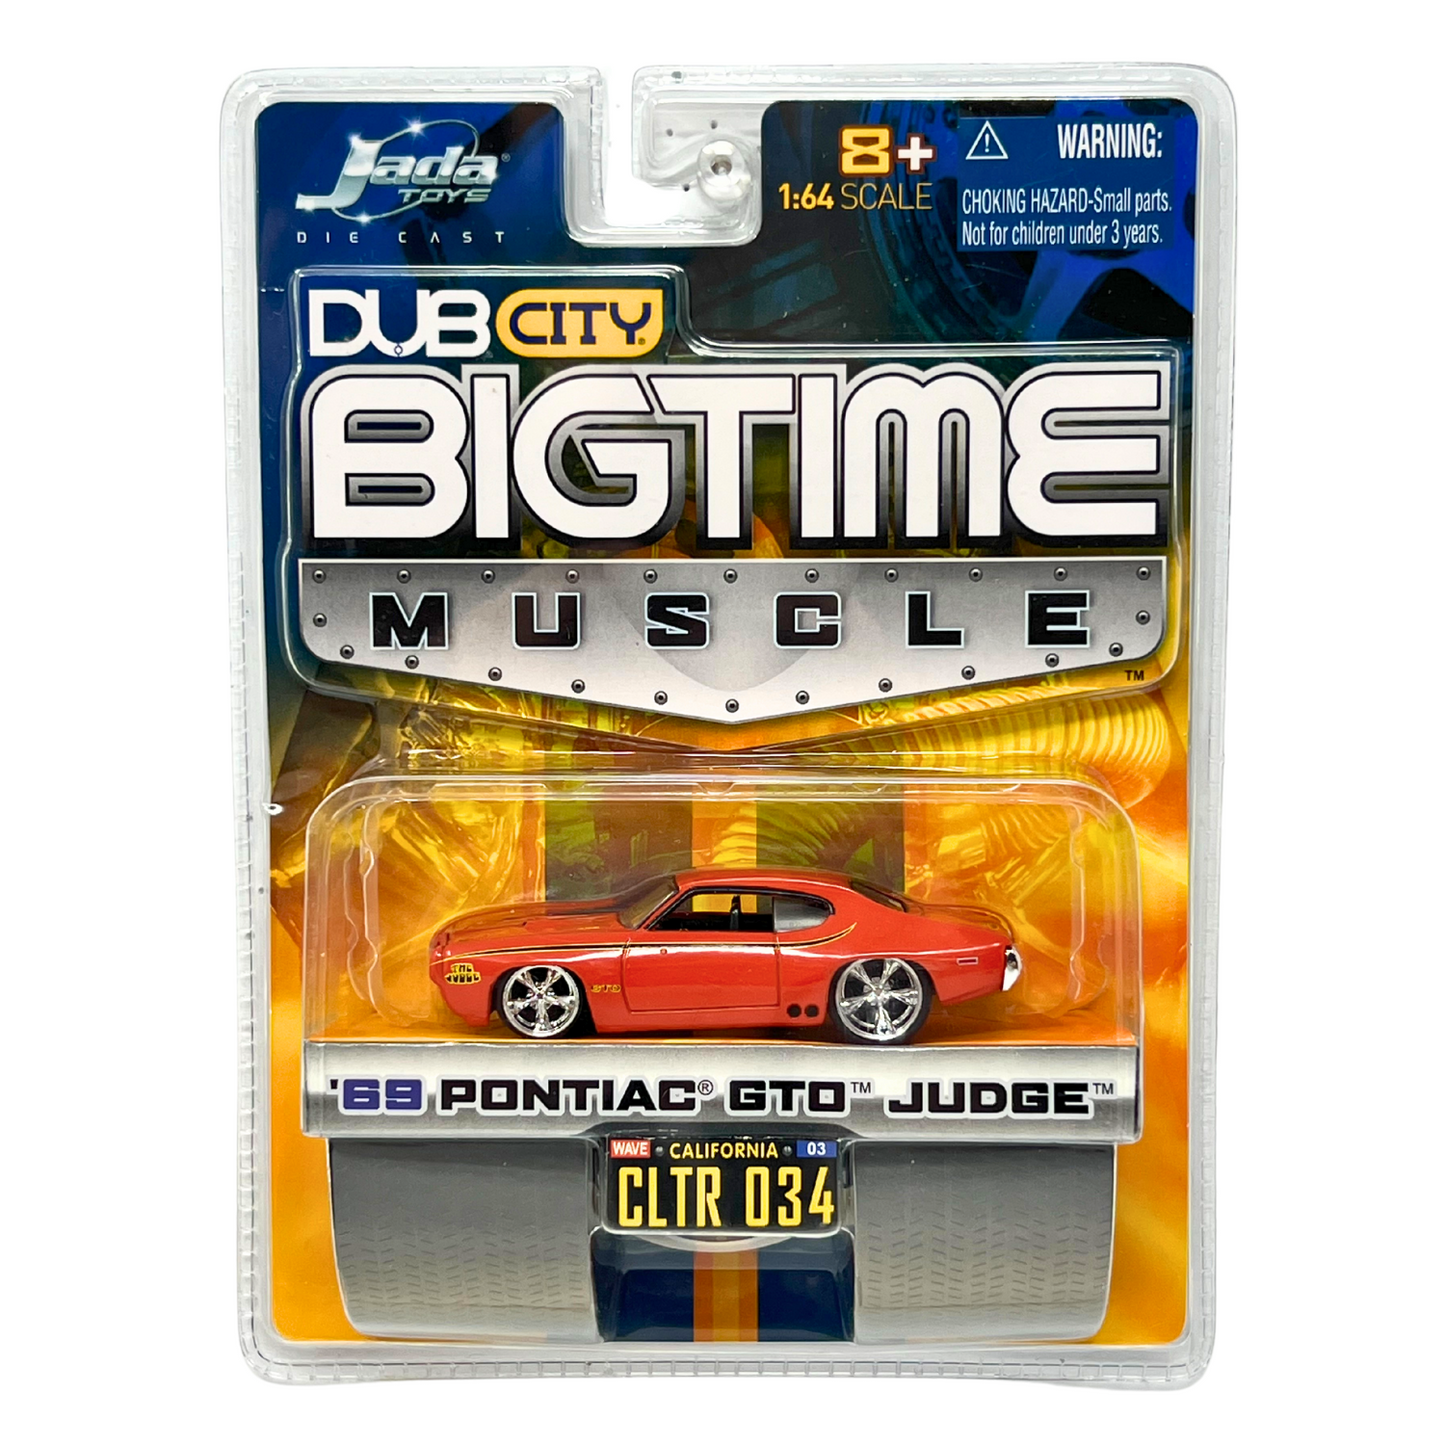 Jada Dub City Bigtime Muscle 1969 Pontiac GTO Judge 1:64 Diecast Red